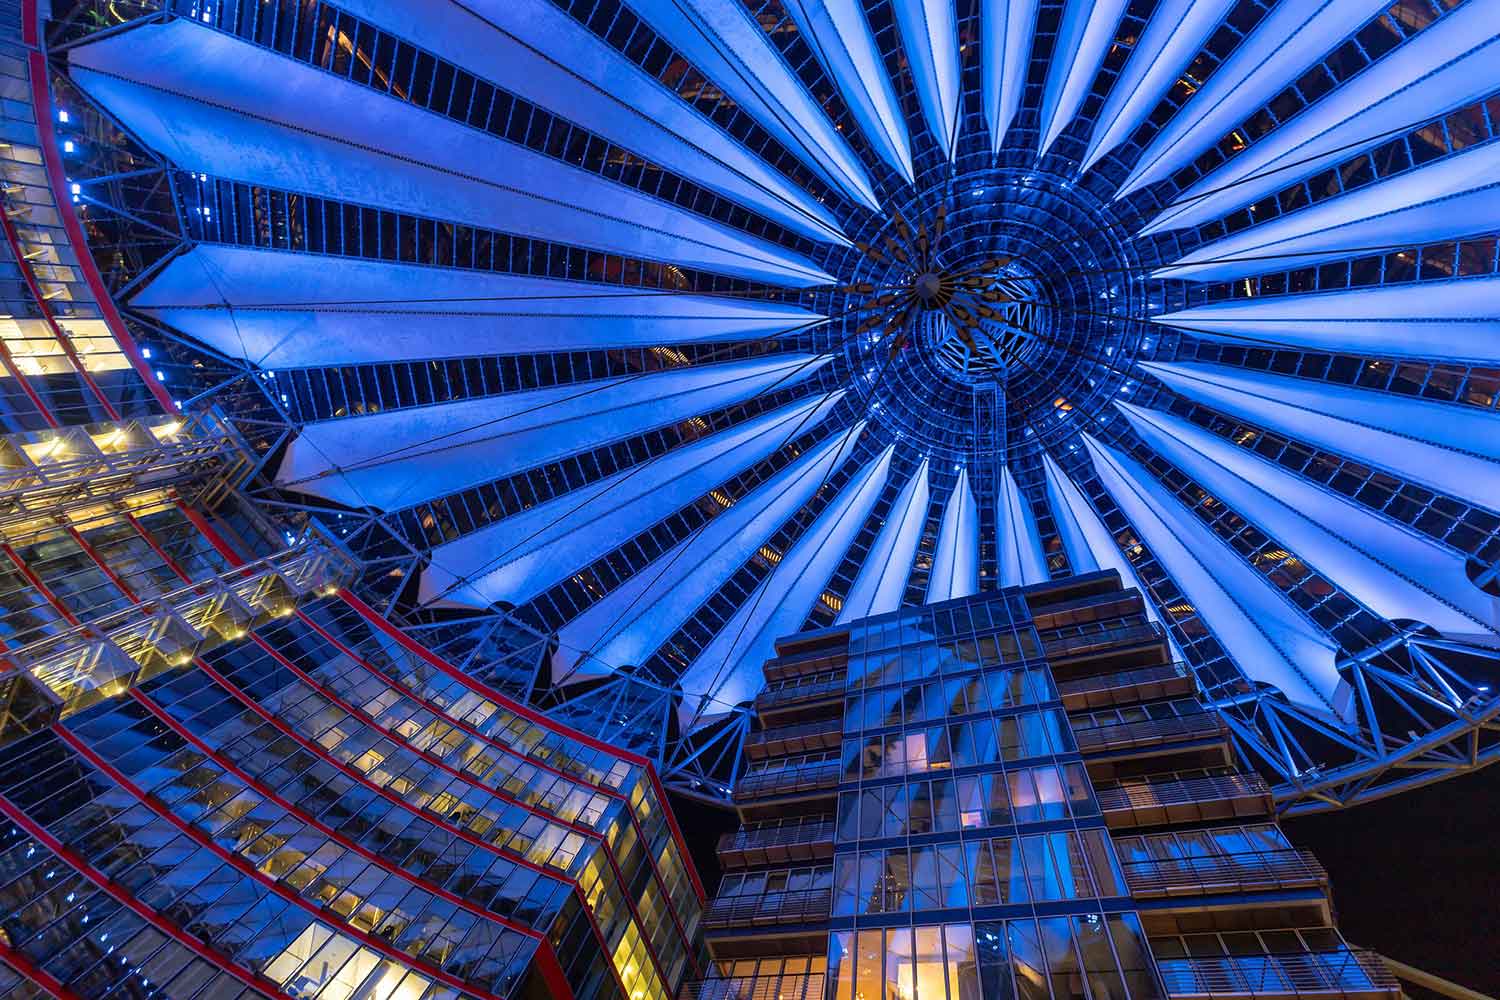 Blick aus geringer Höhe auf die Kuppel des Sony Centers am Potsdamer Platz in Berlin. Symbolbild für Smart City Modellprojekt Berlin.